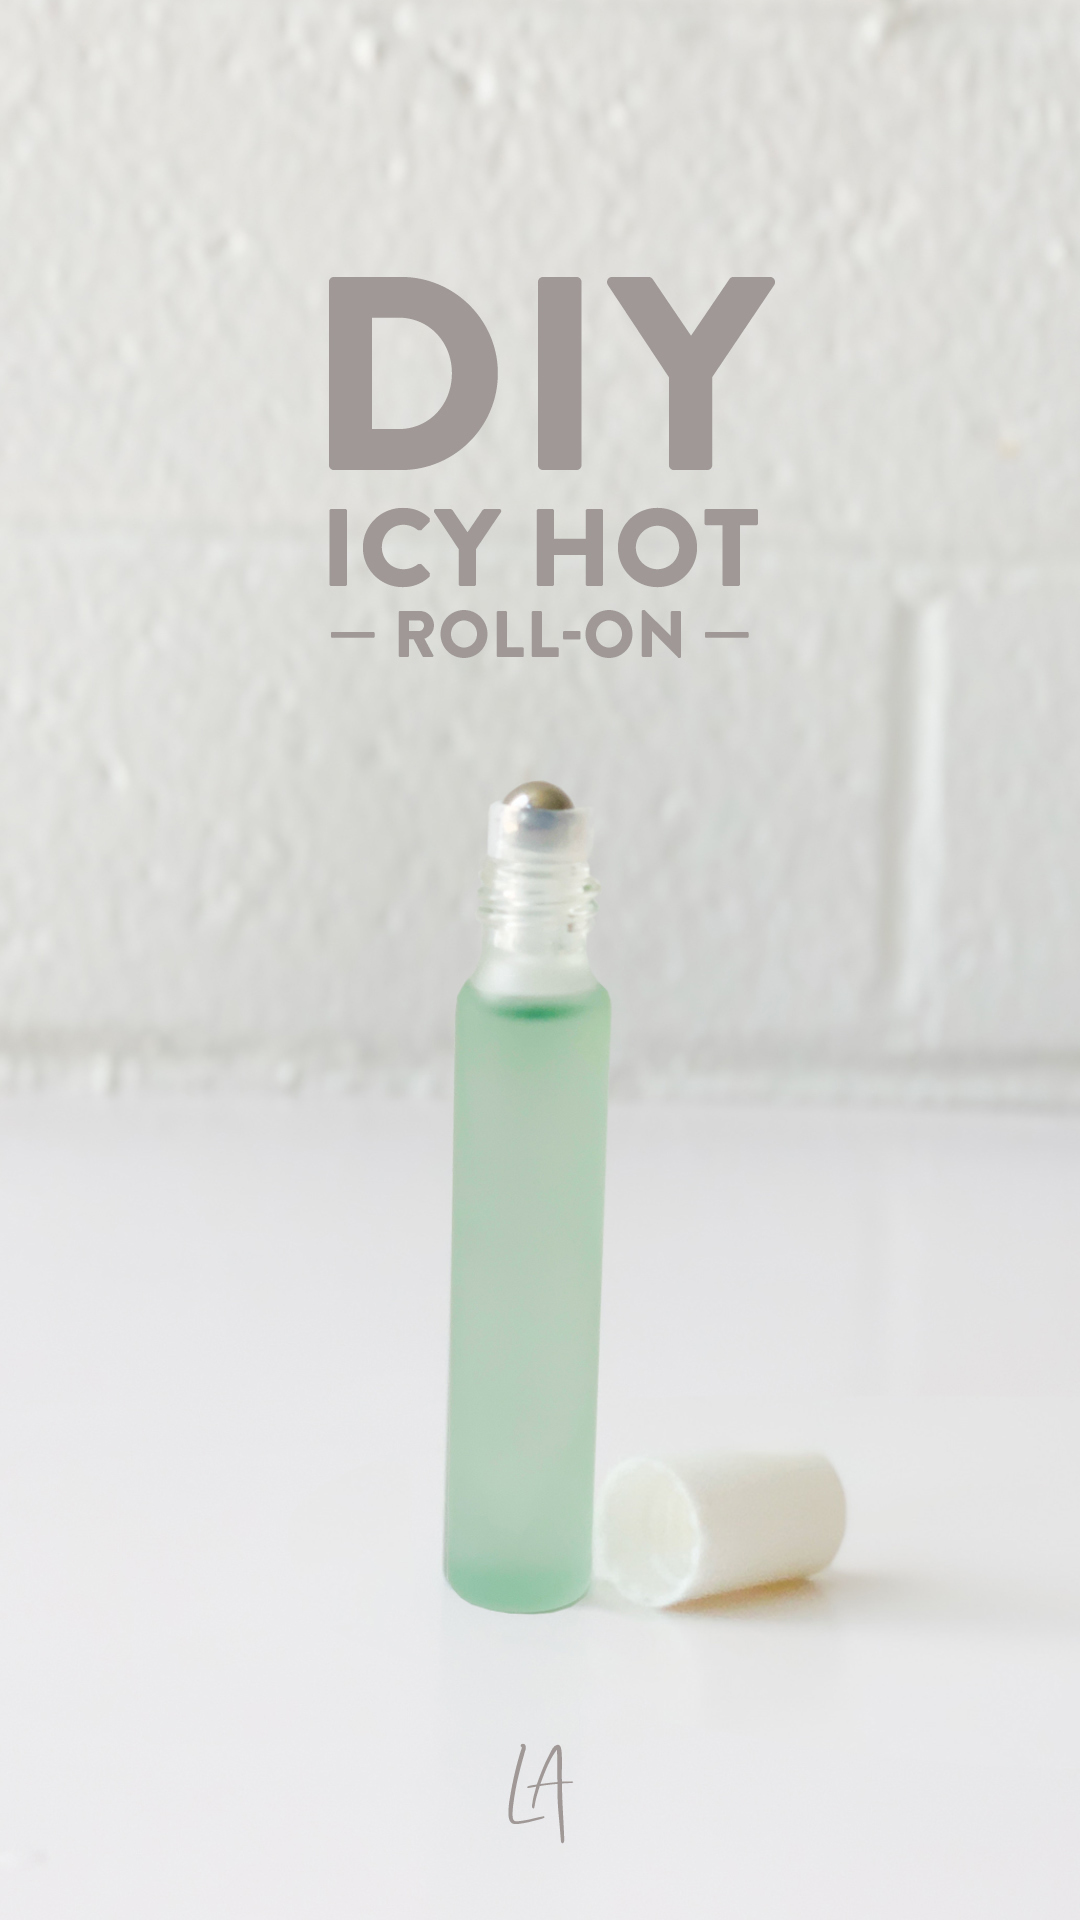 DIY Icy Hot roll-on recipe